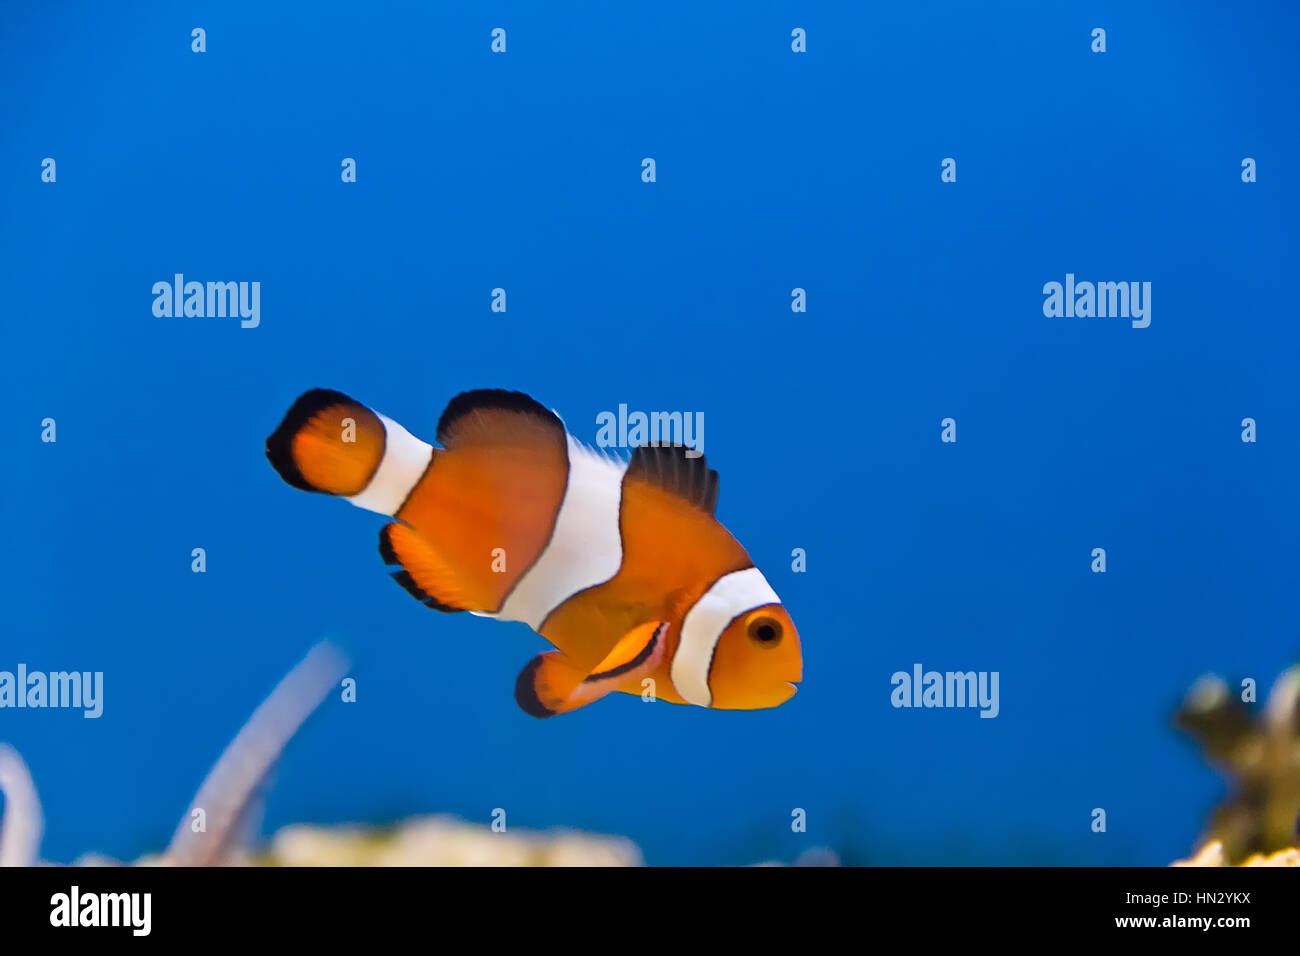 Image of clown fish in aquarium water Stock Photo